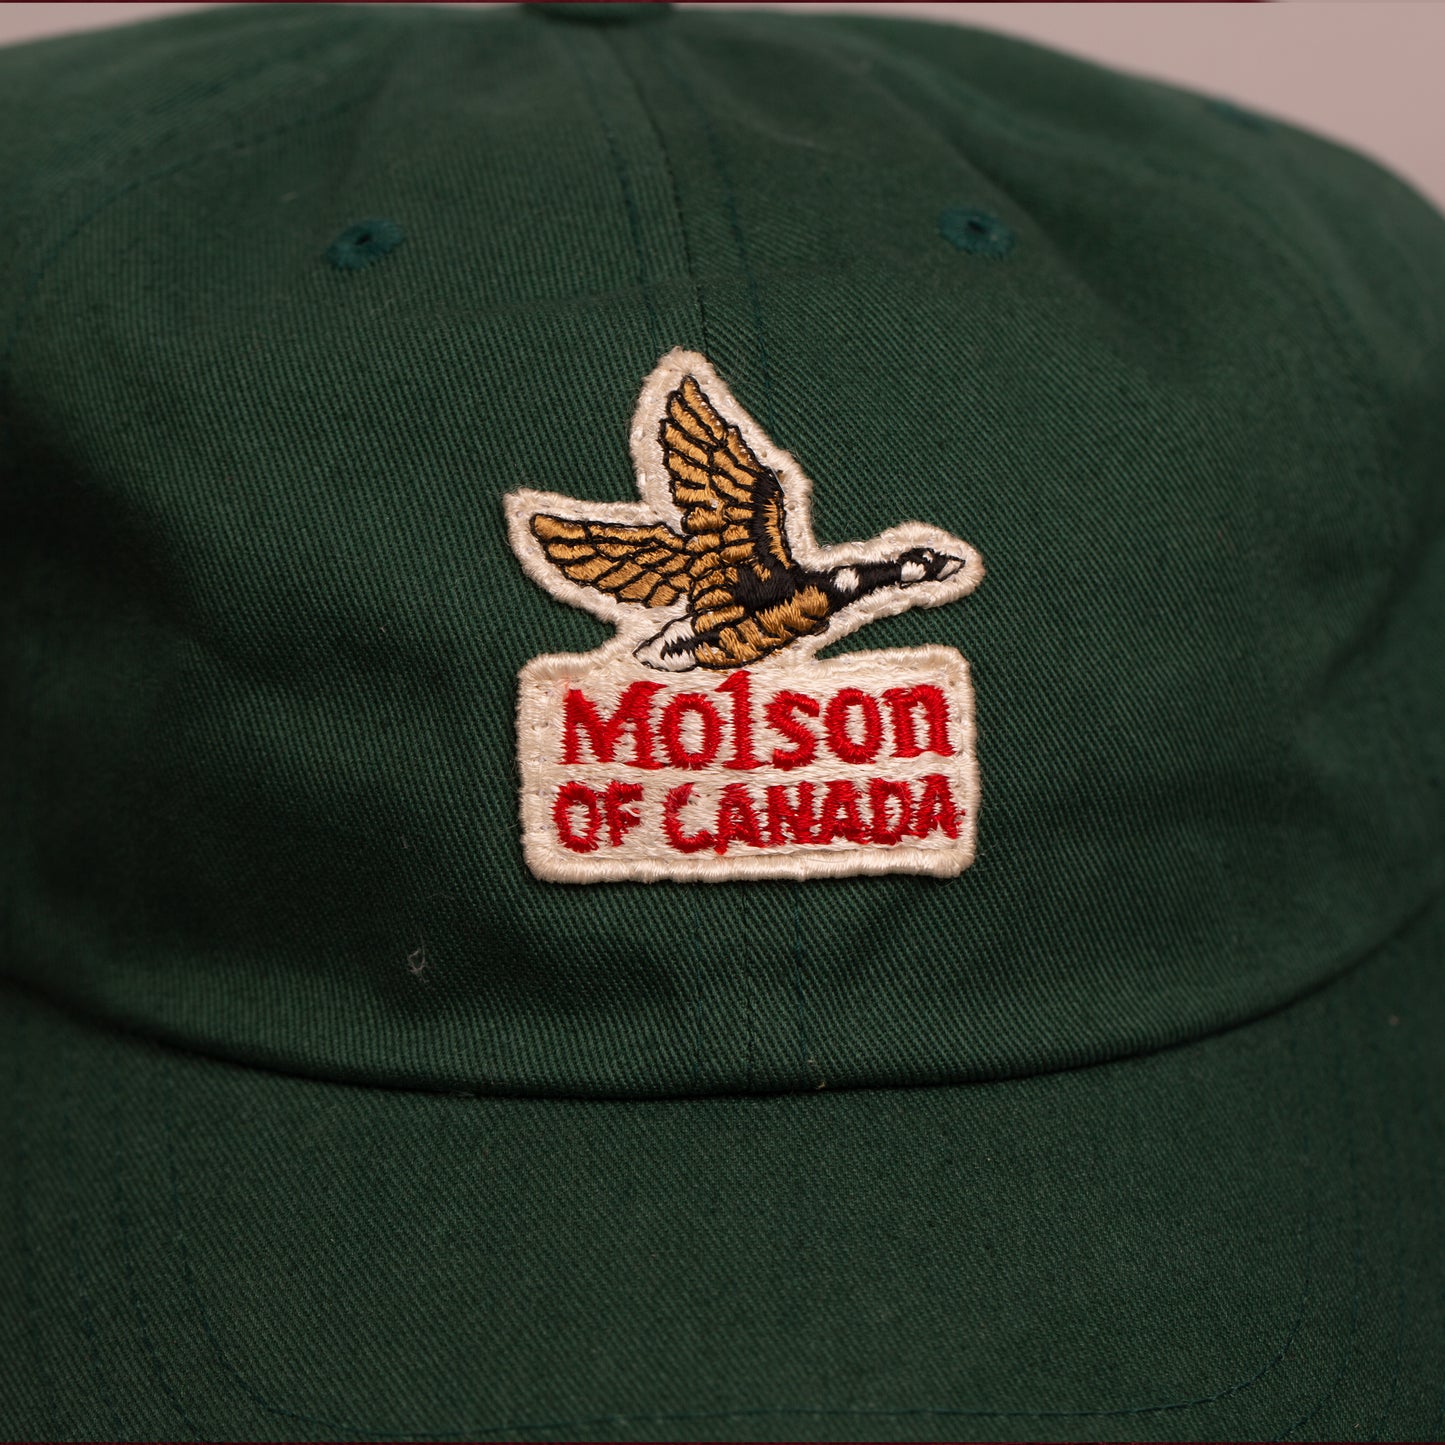 Molson of Canada